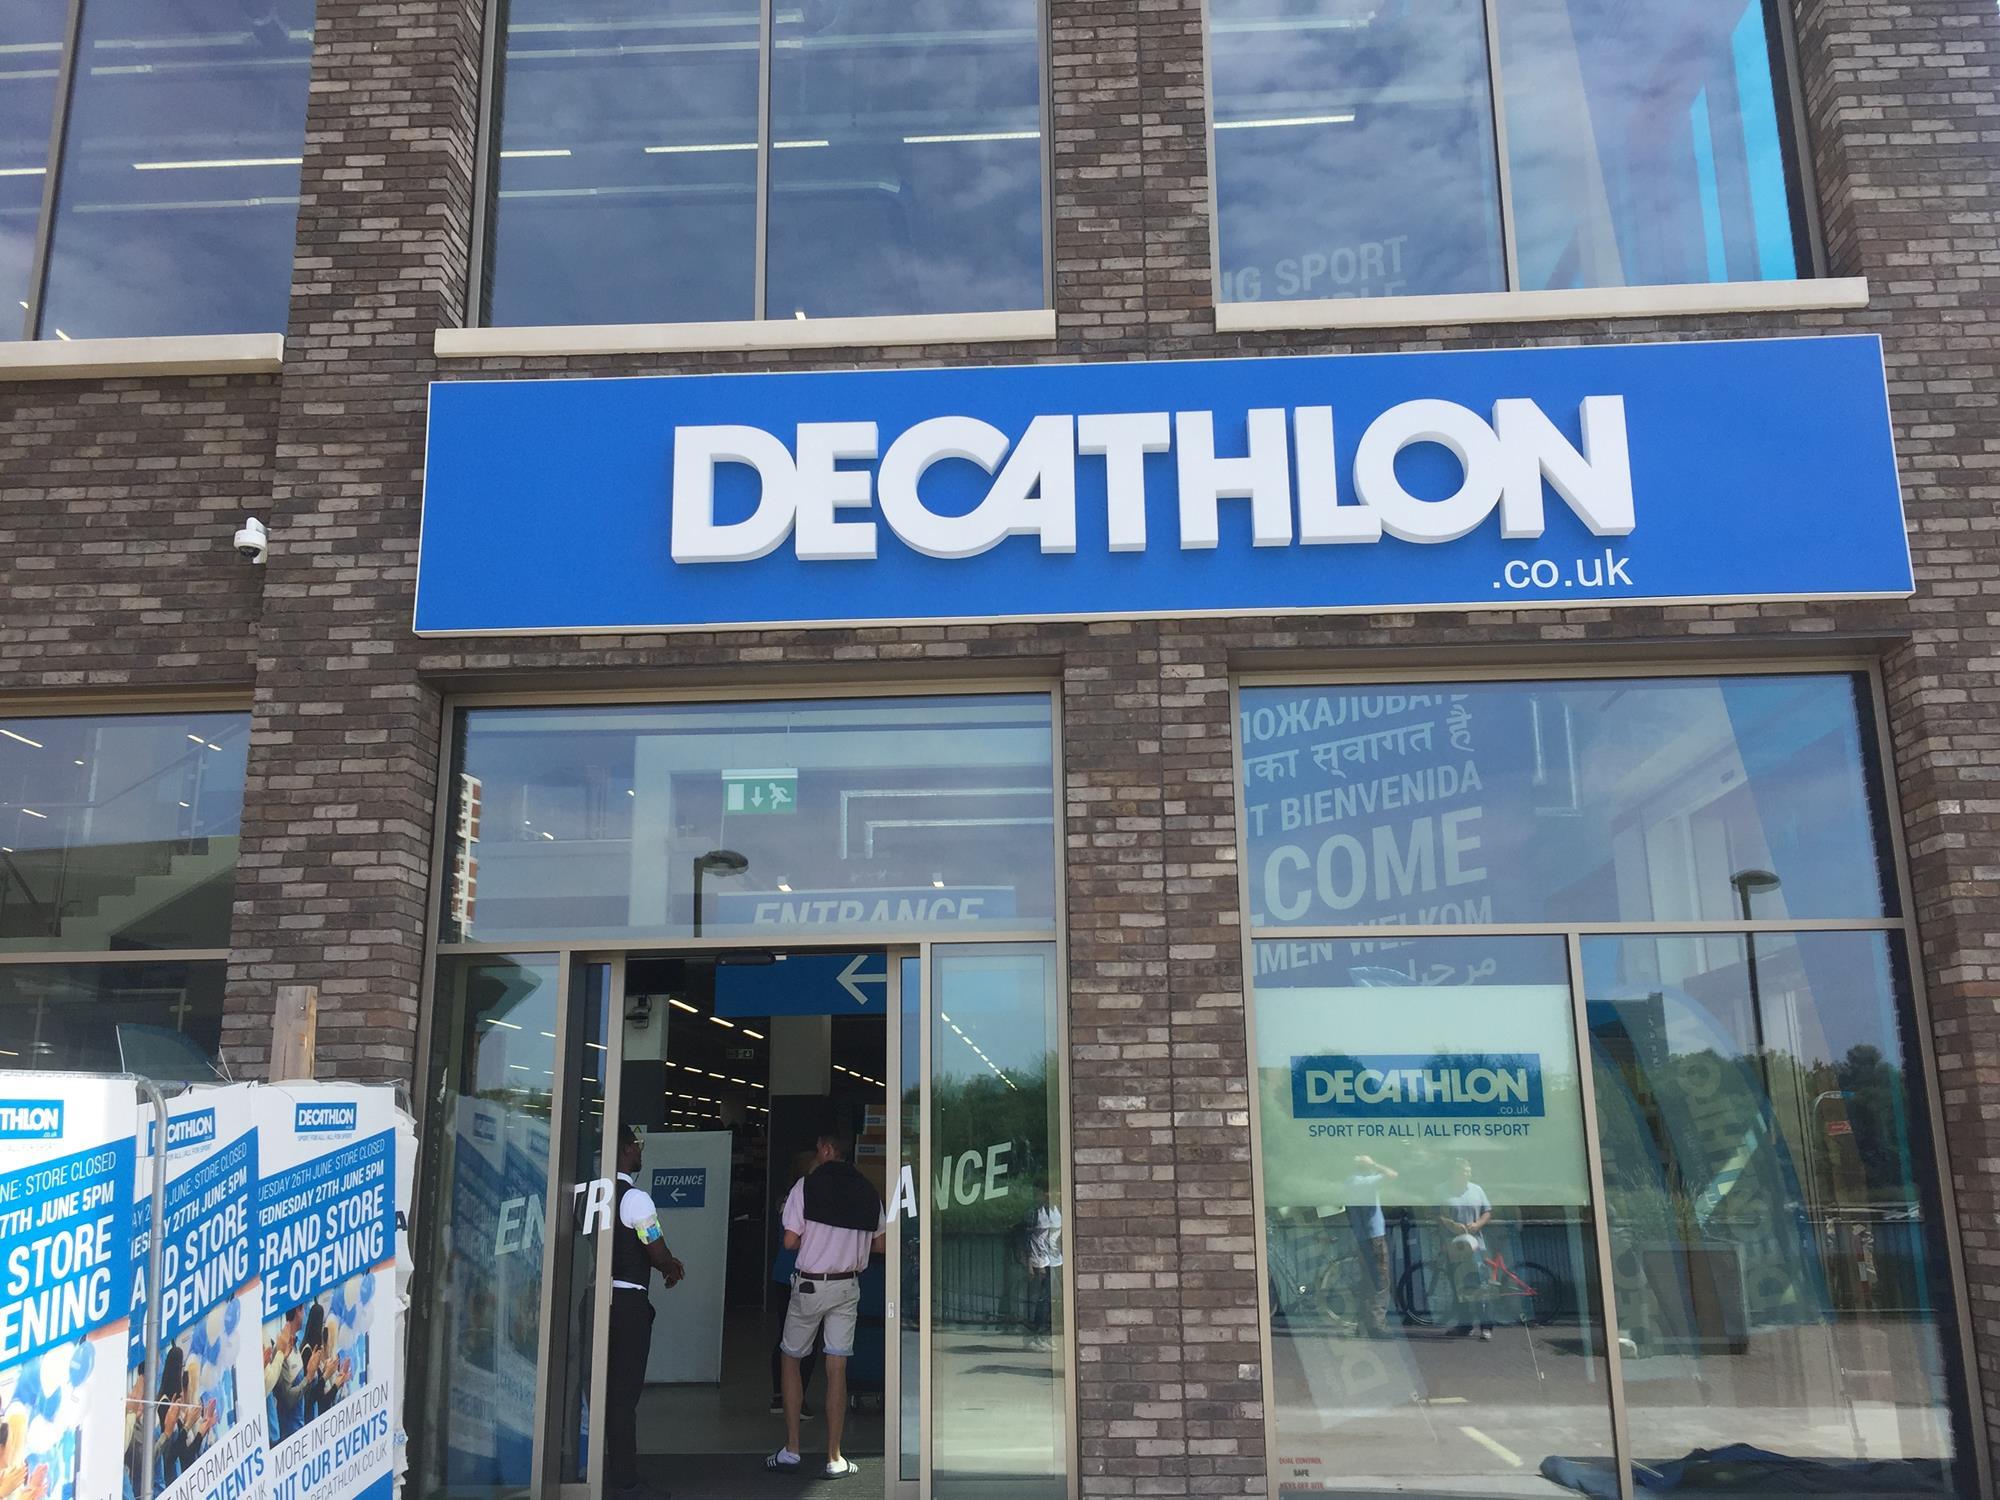 decathlon uk shop online